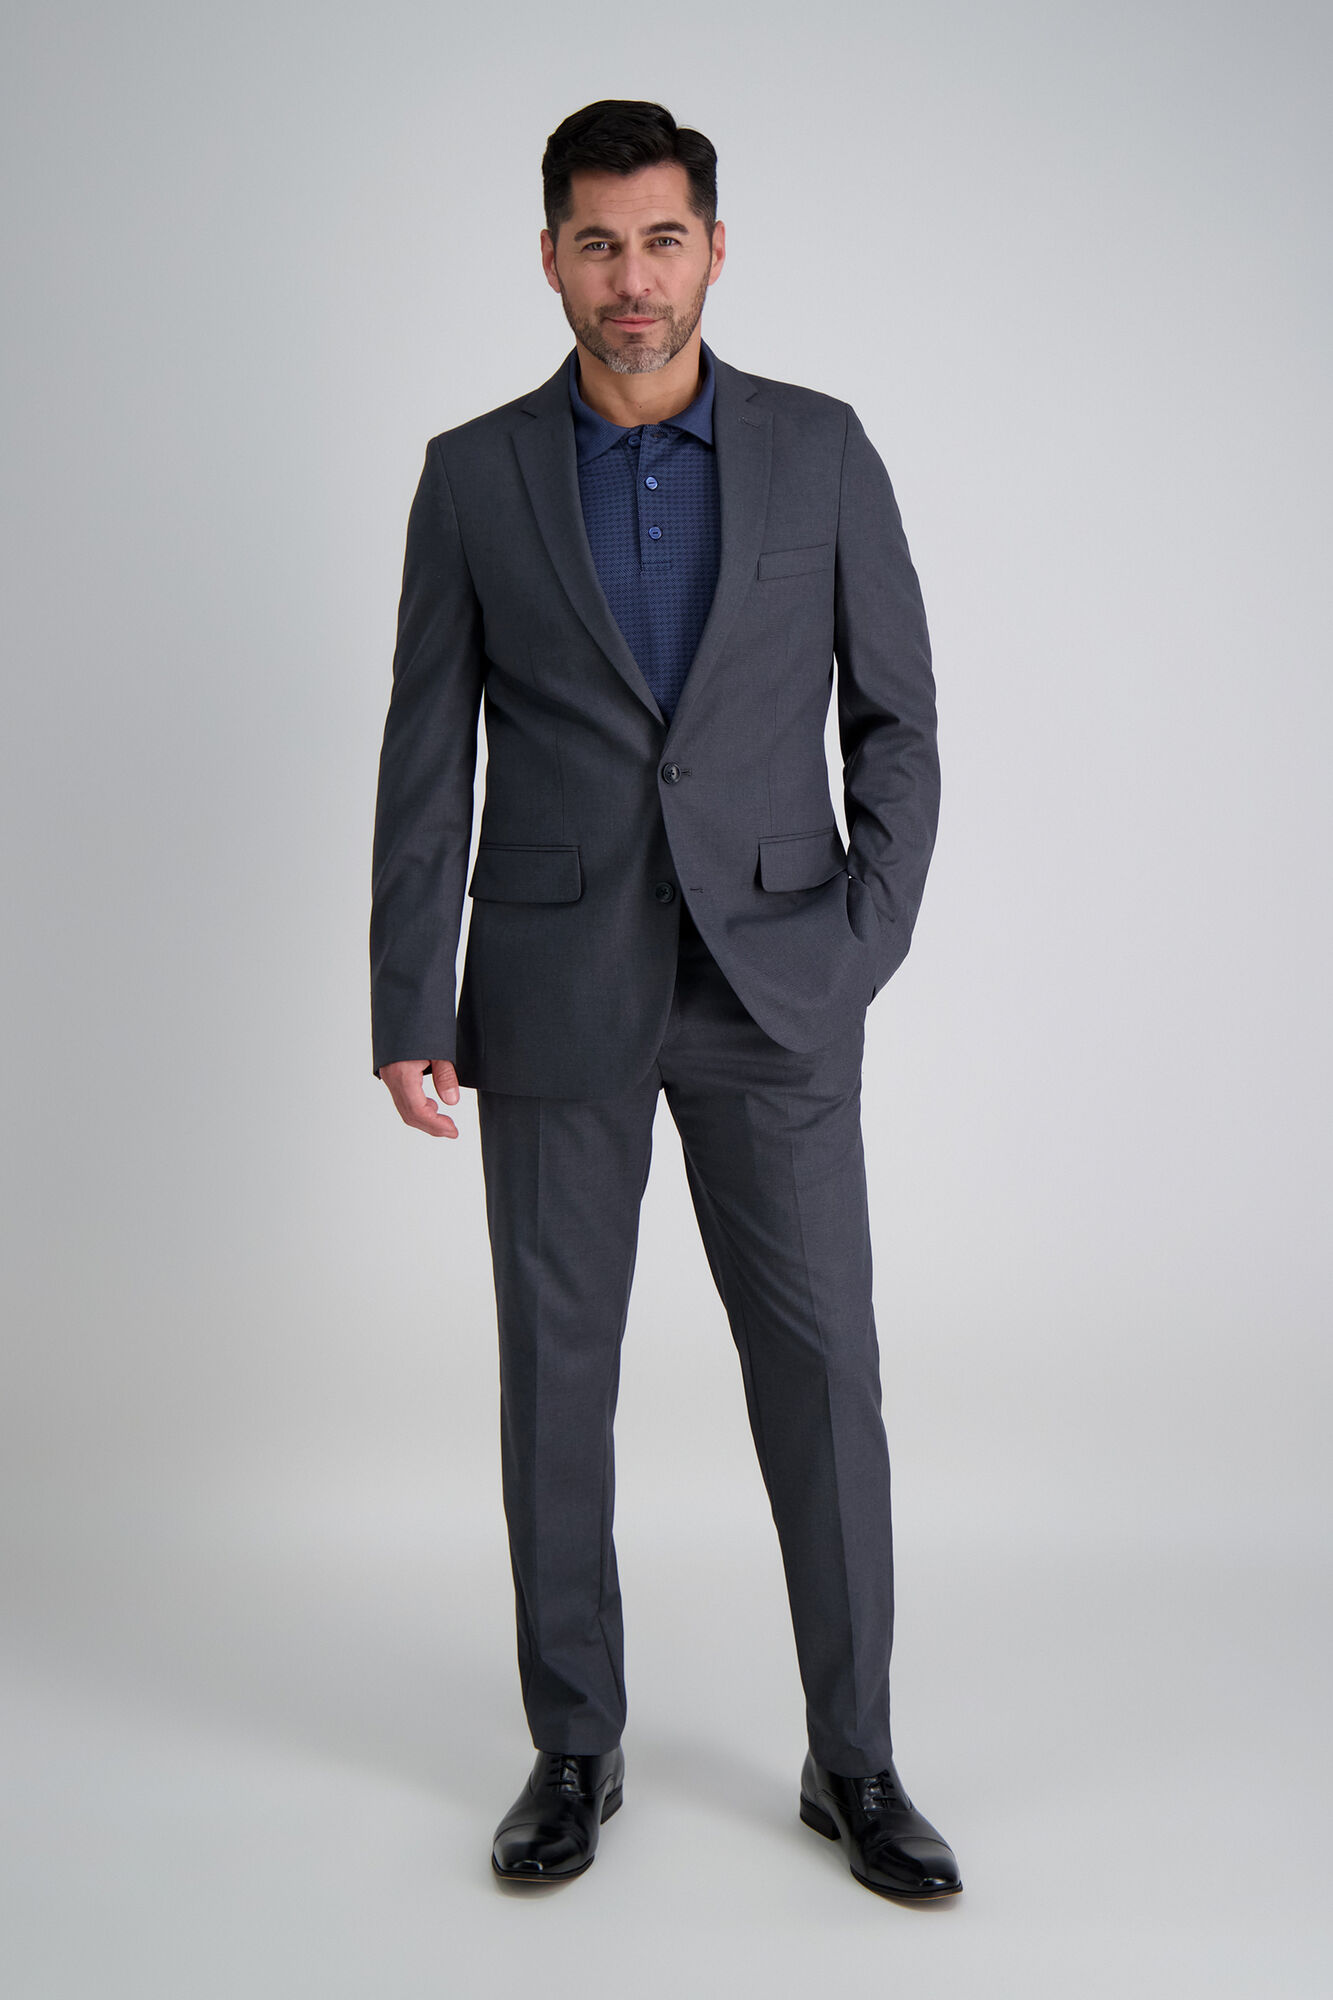 J.M. Haggar Premium Stretch Shadow Check Suit Jacket Black / Charcoal (HZ80274 Clothing Suits) photo